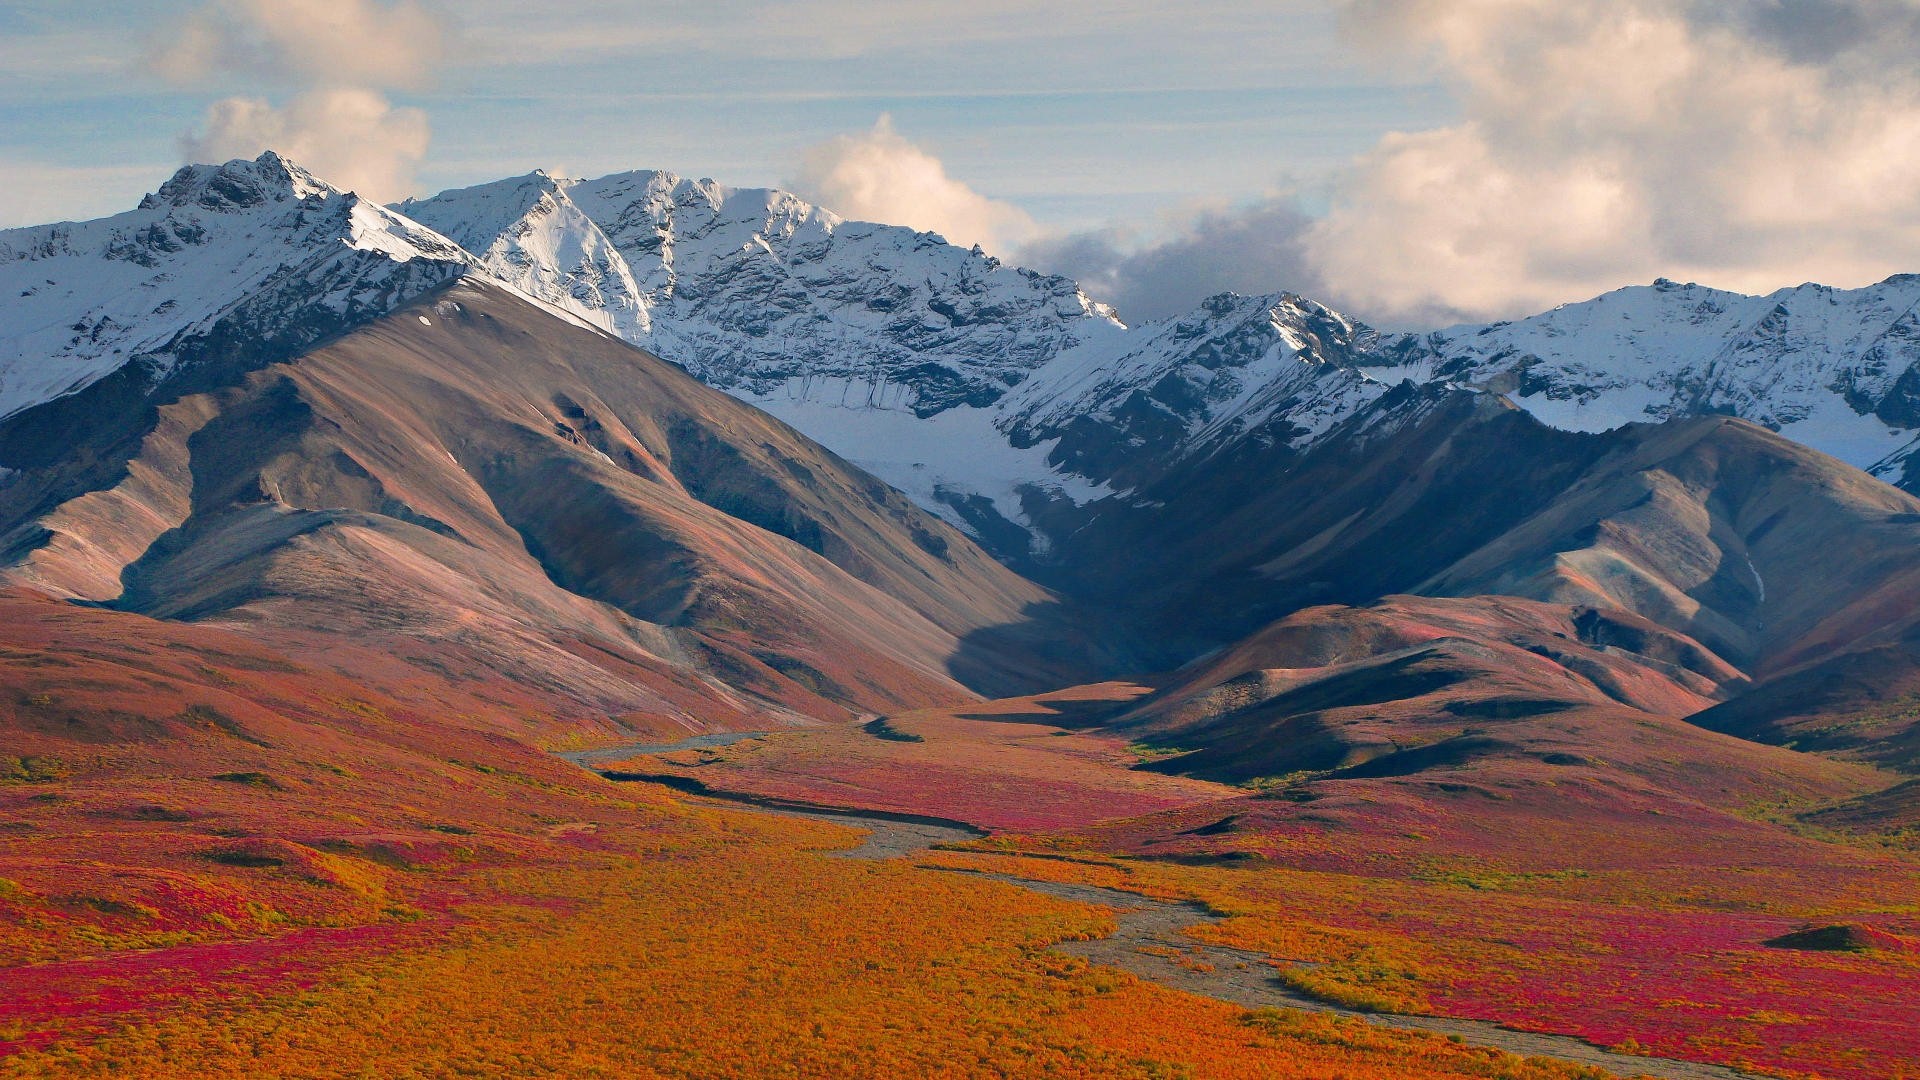 Denali National Park Mountain In Alaska United States